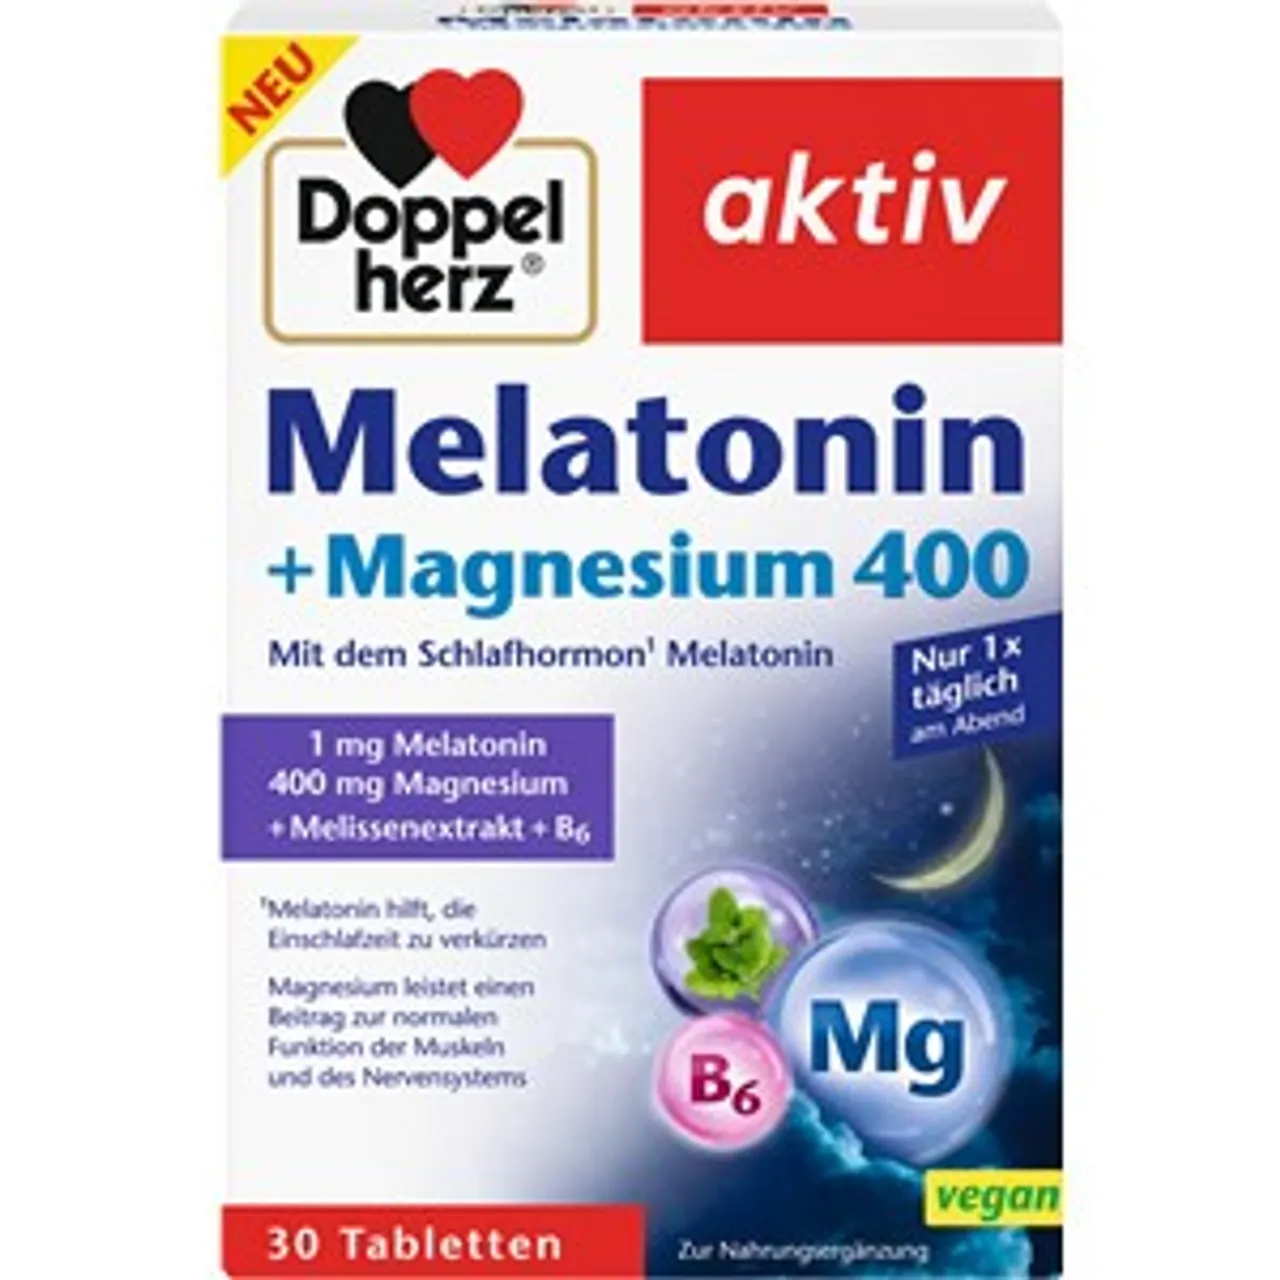 Doppelherz Nerven & Beruhigung Melatonin + Magnesium 400 Vitamine Unisex